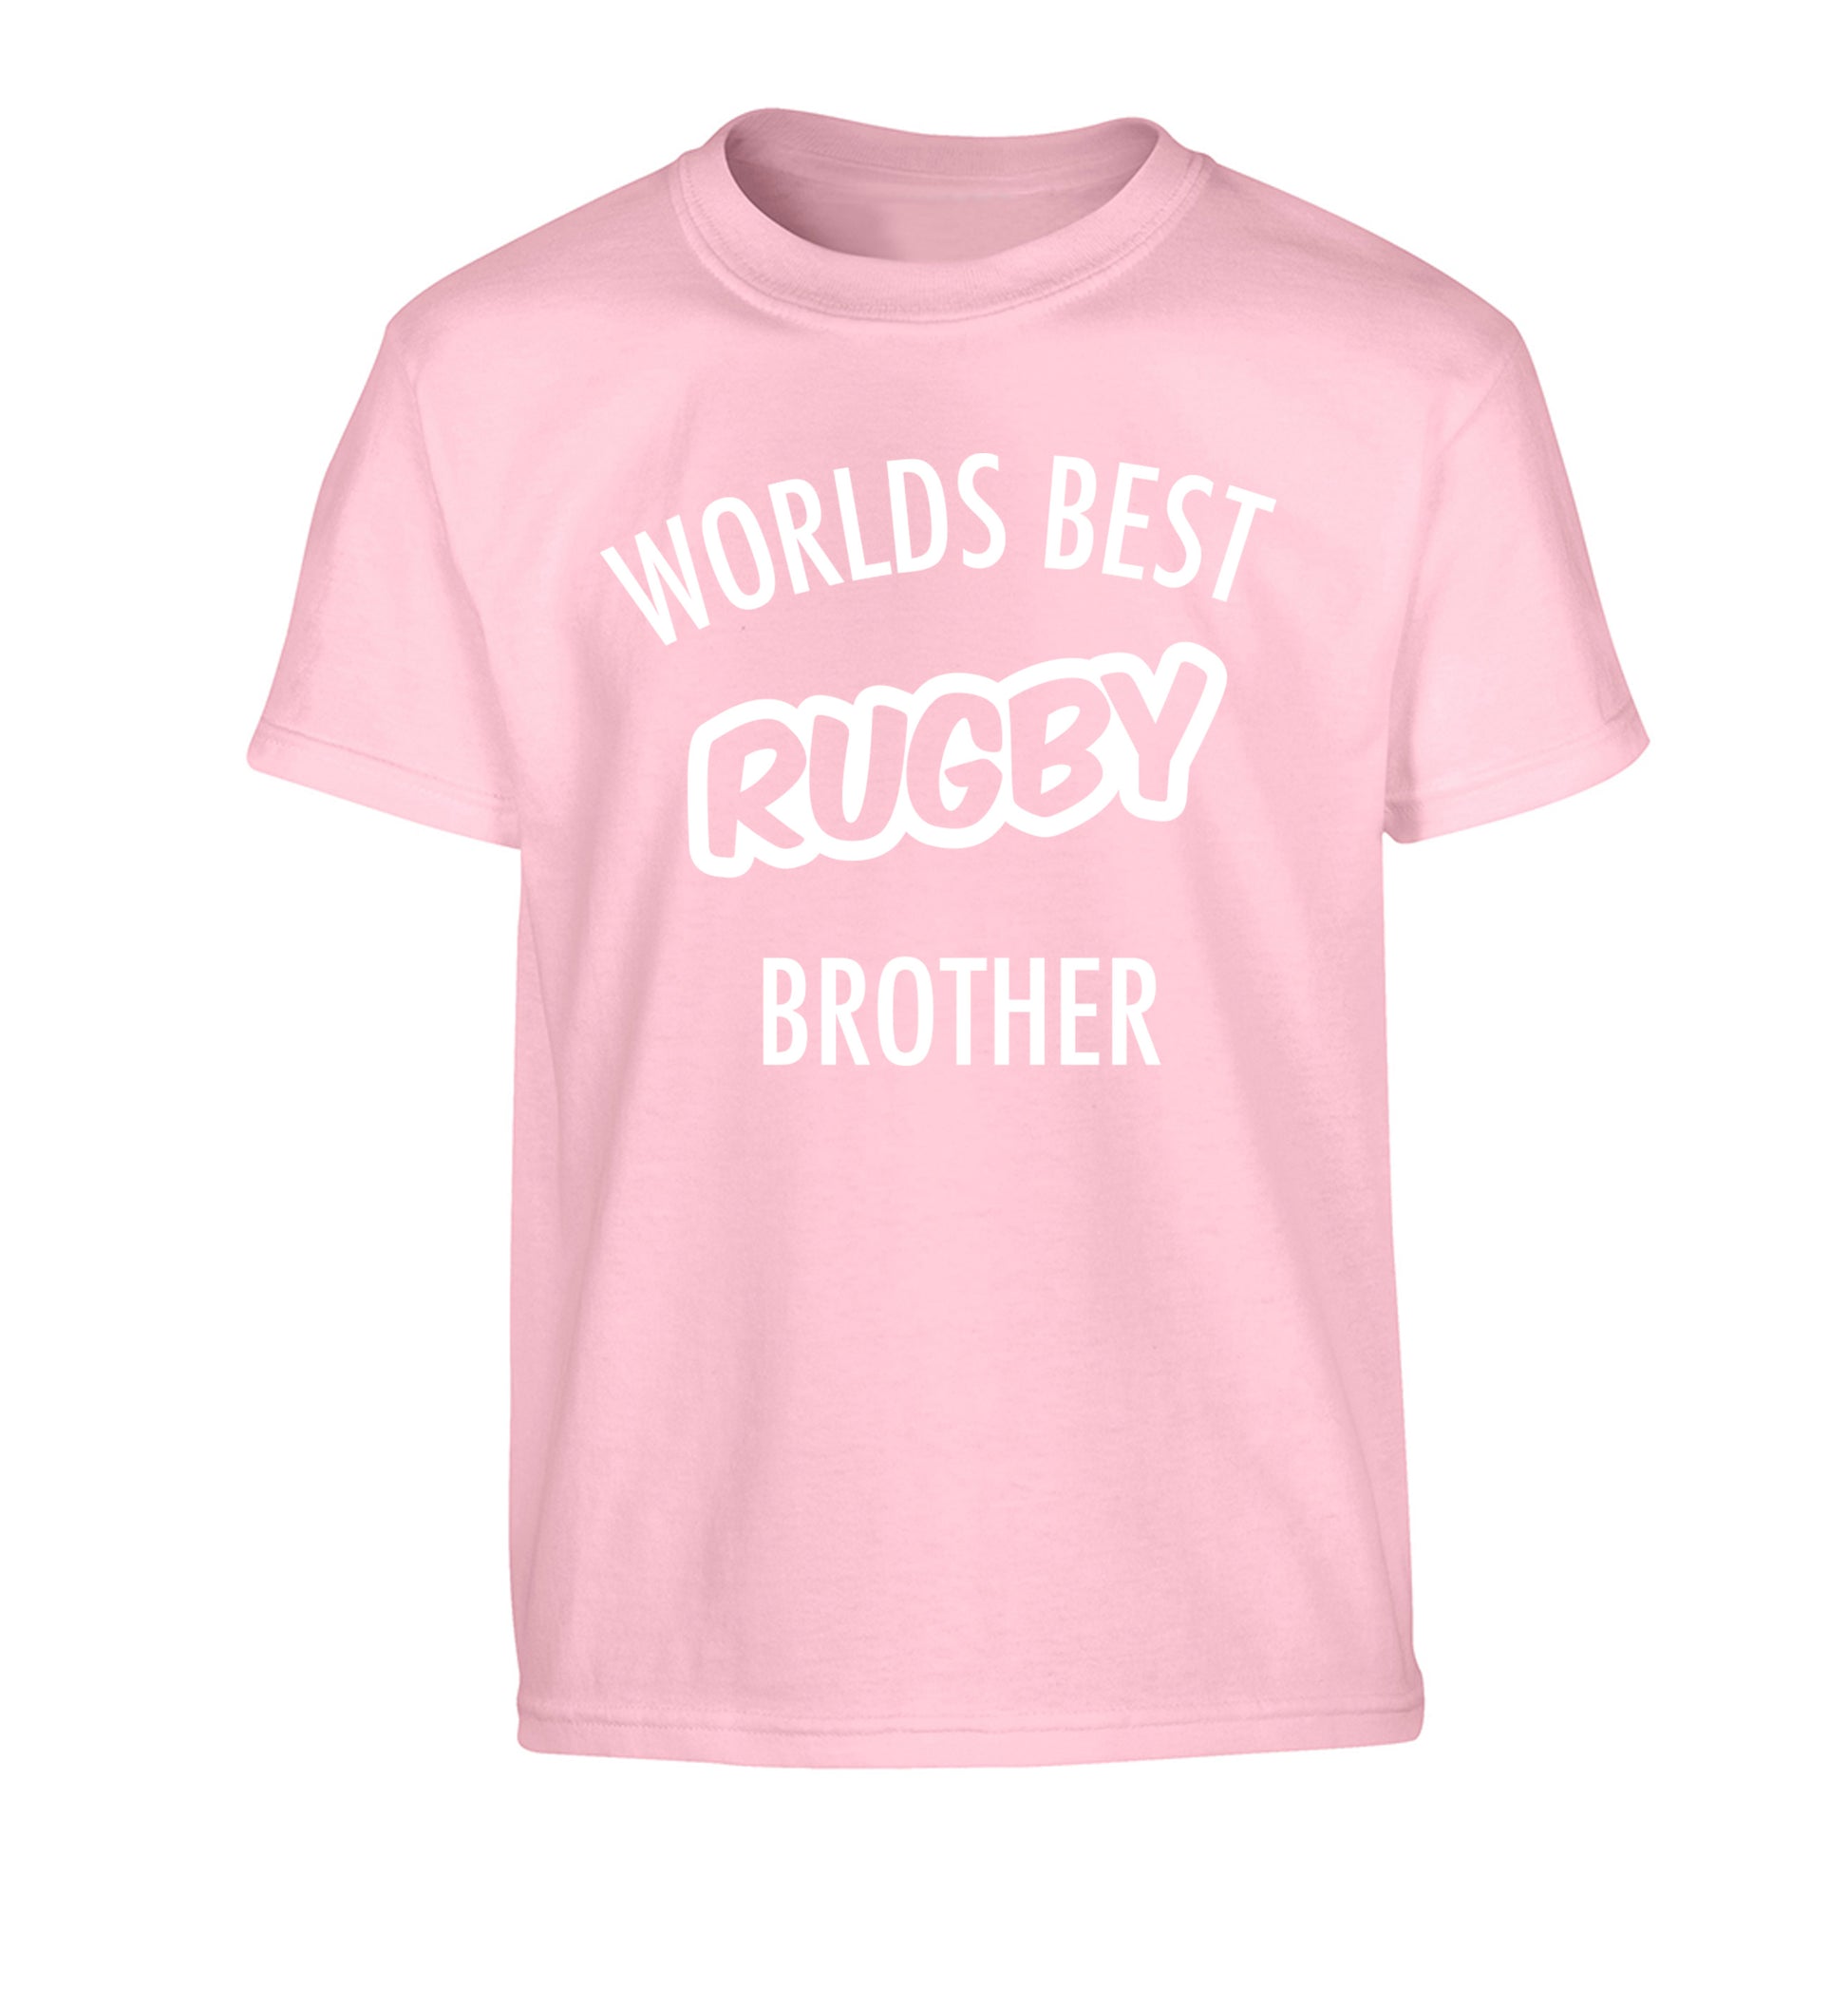 Worlds best rugby brother Children's light pink Tshirt 12-13 Years